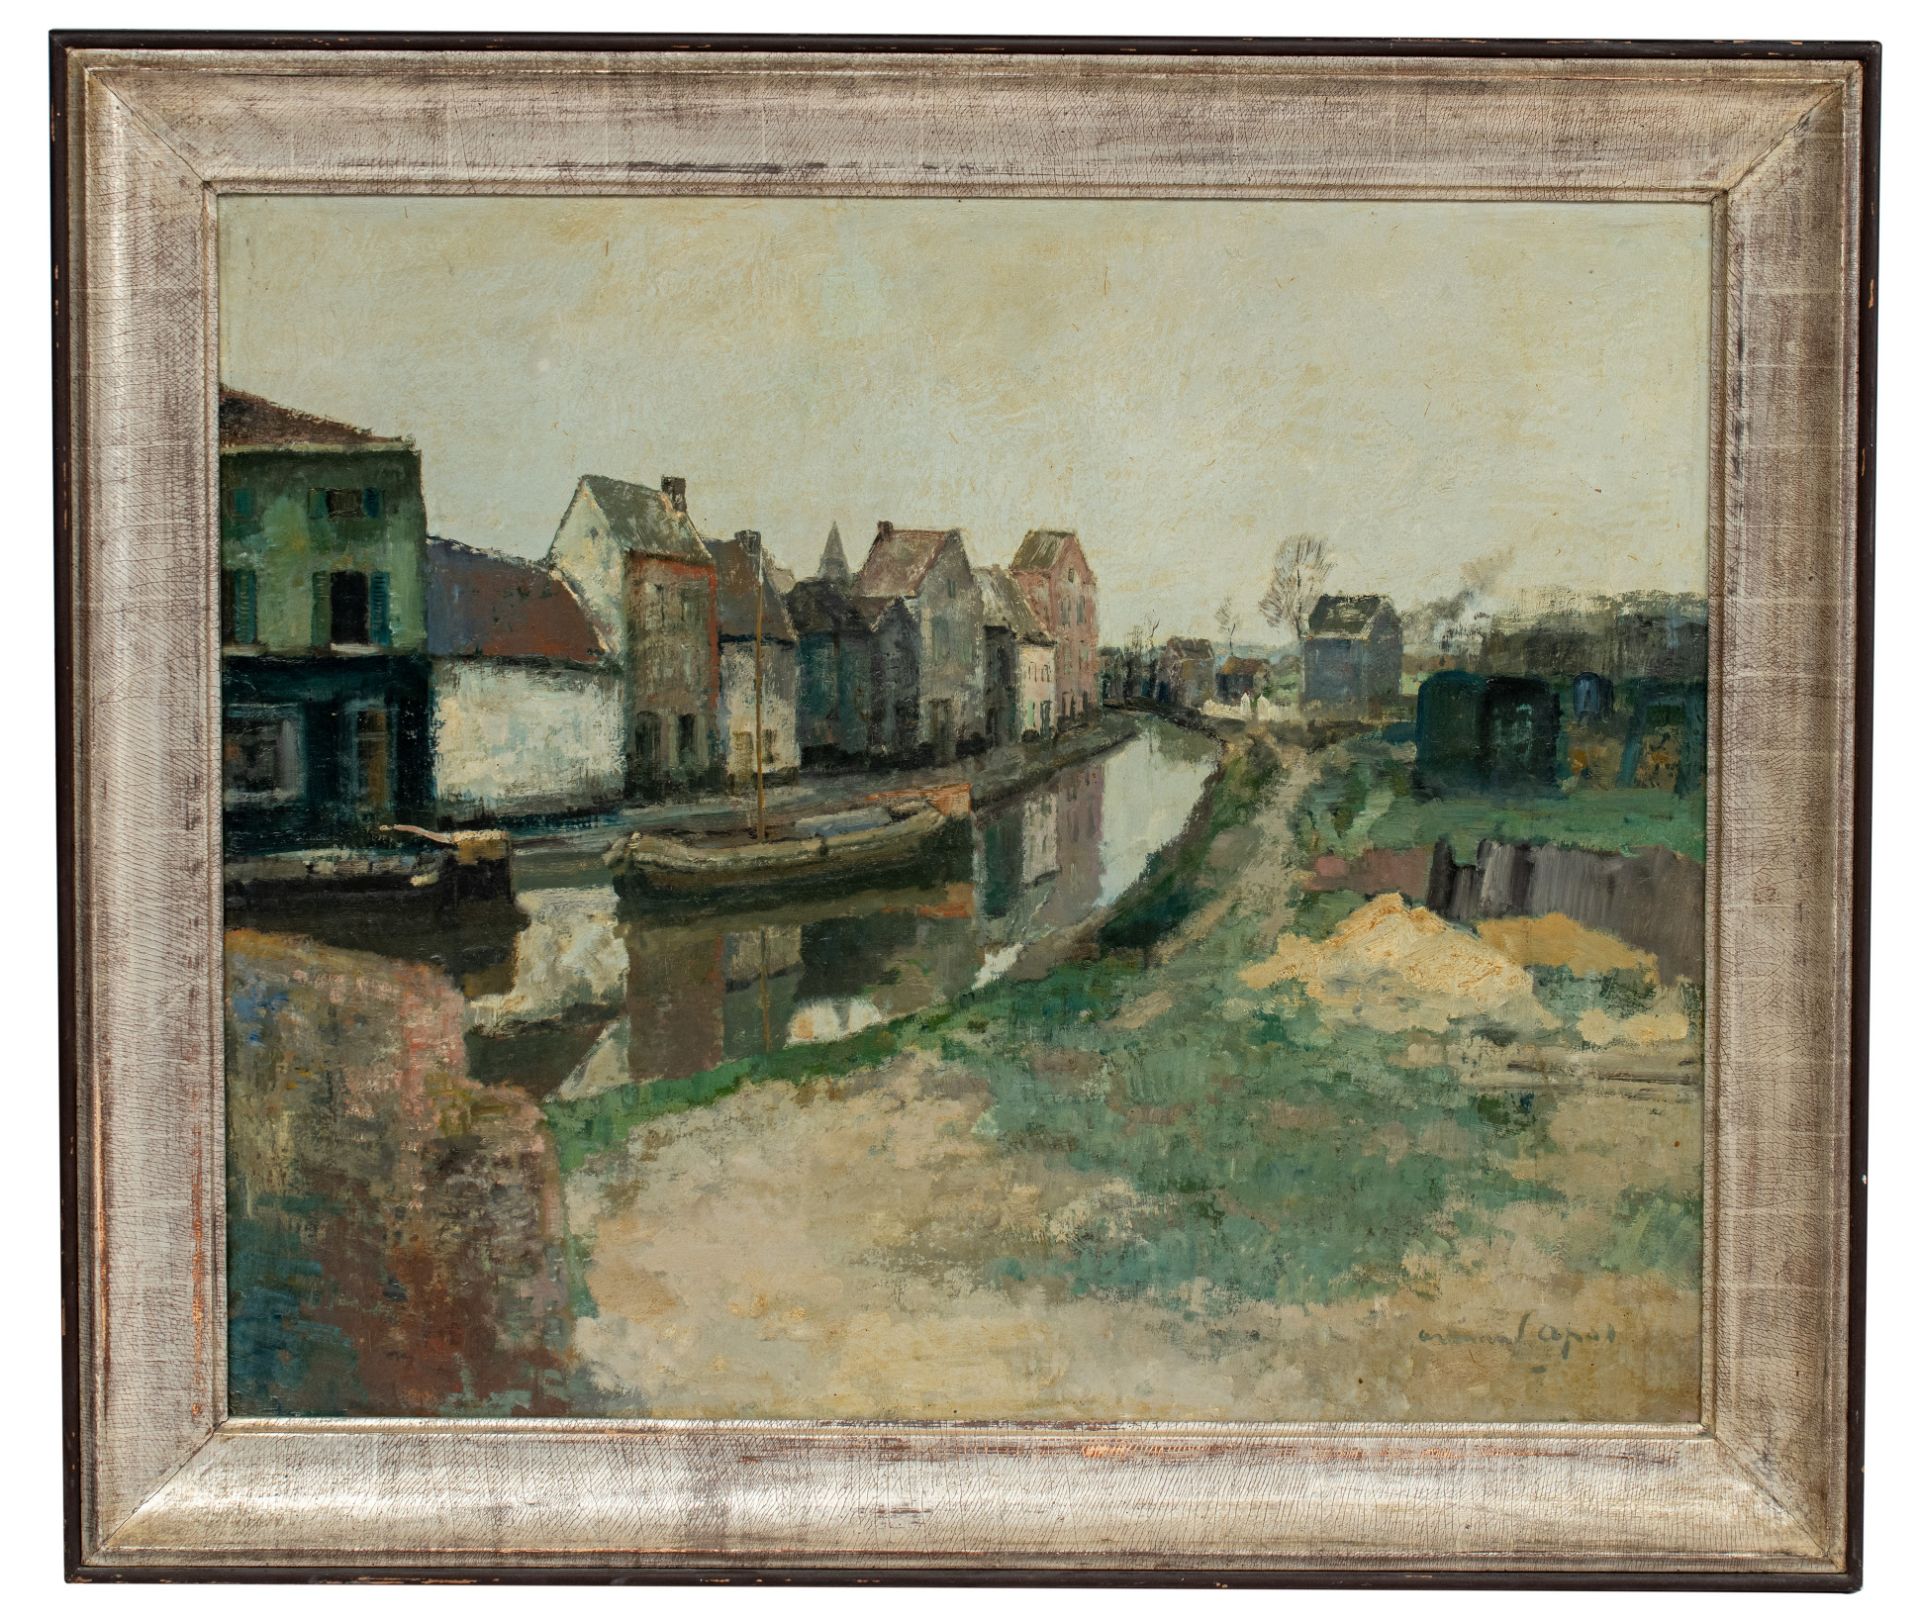 Armand Apol (1879-1950), 'Jardin de ma Maison', oil on canvas, 75 x 90 cm - Image 2 of 6